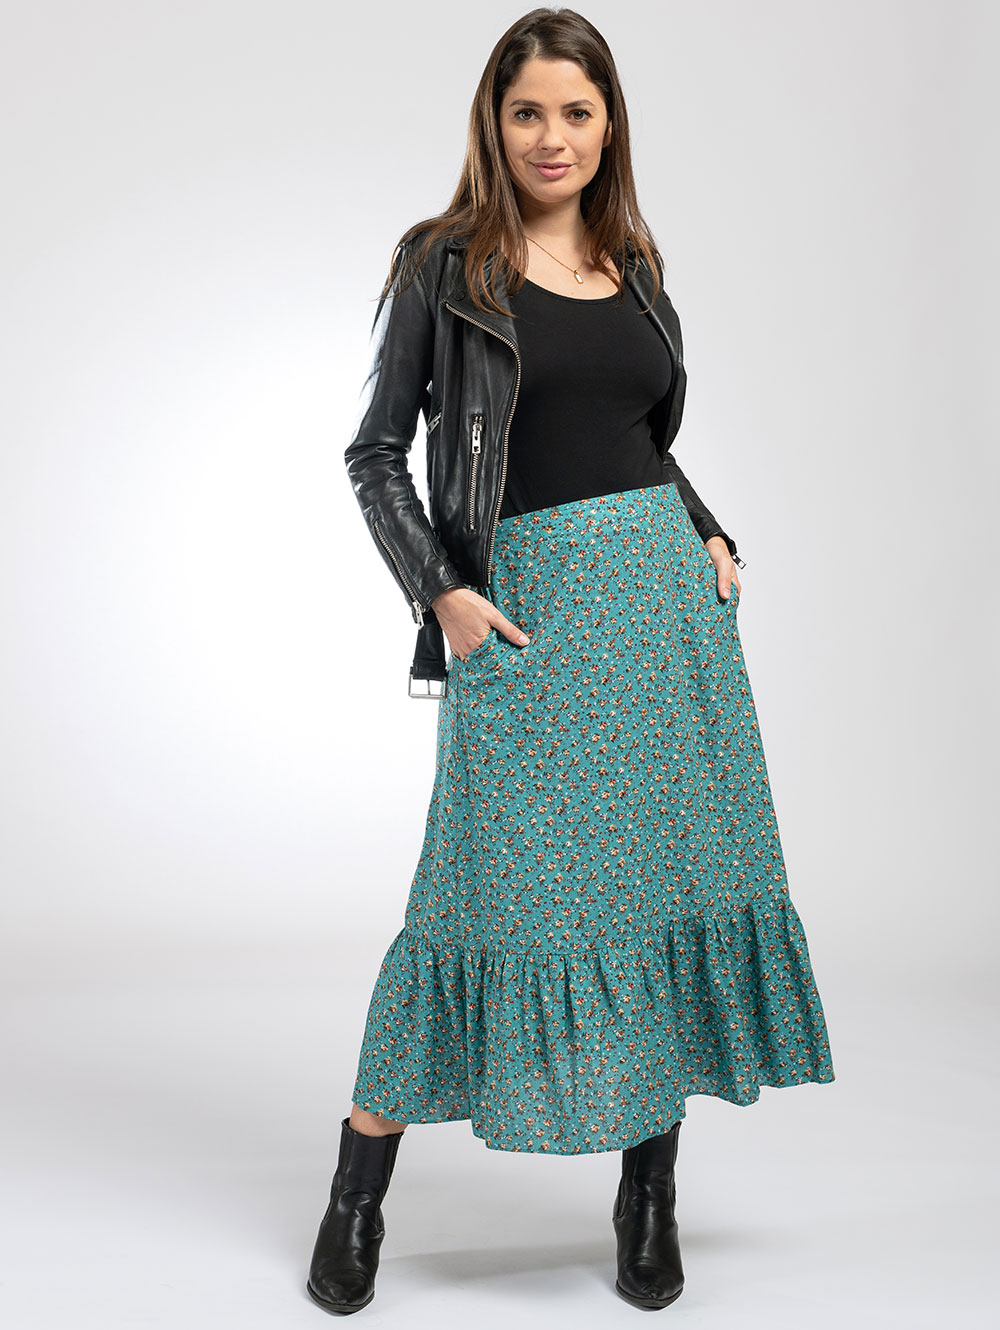 Midi Skirt in Turquoise